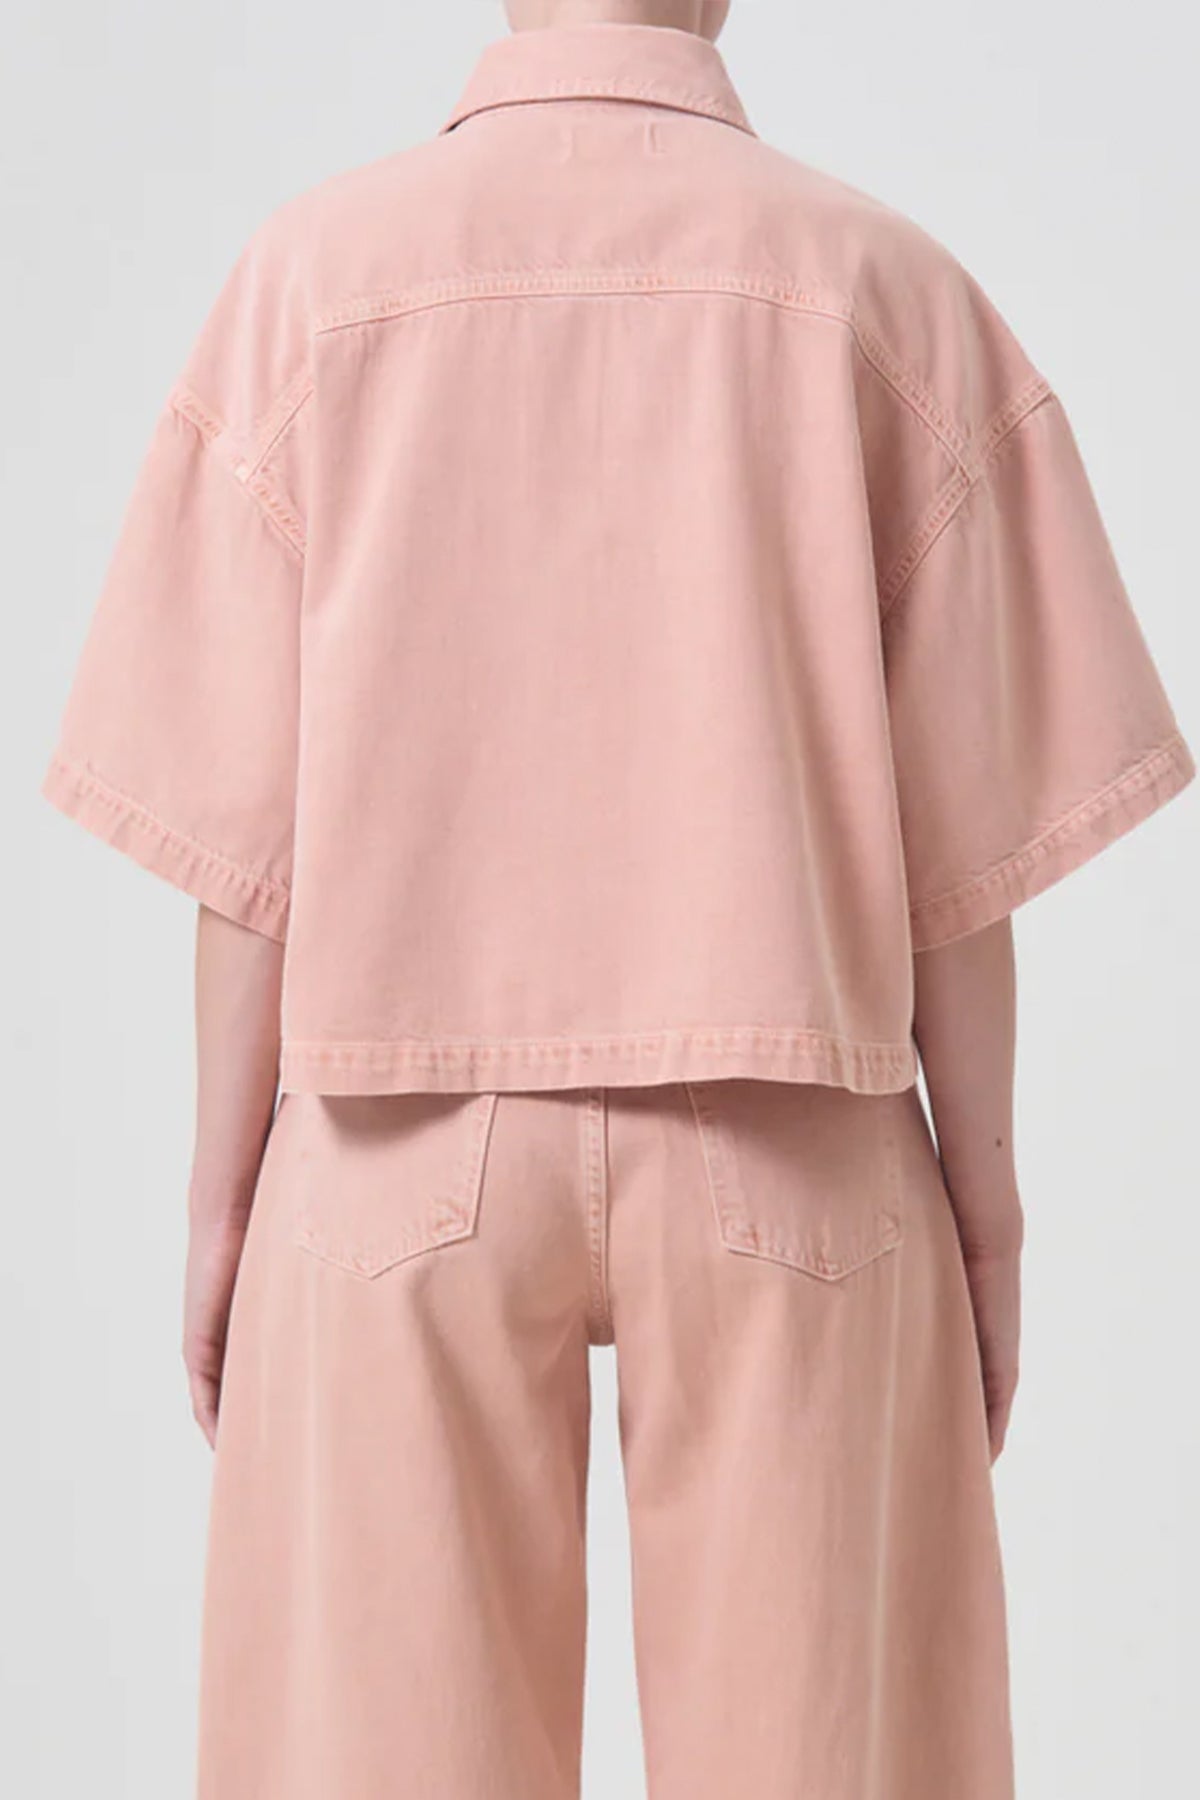 Rona Box Shirt in Pink Salt - shop-olivia.com